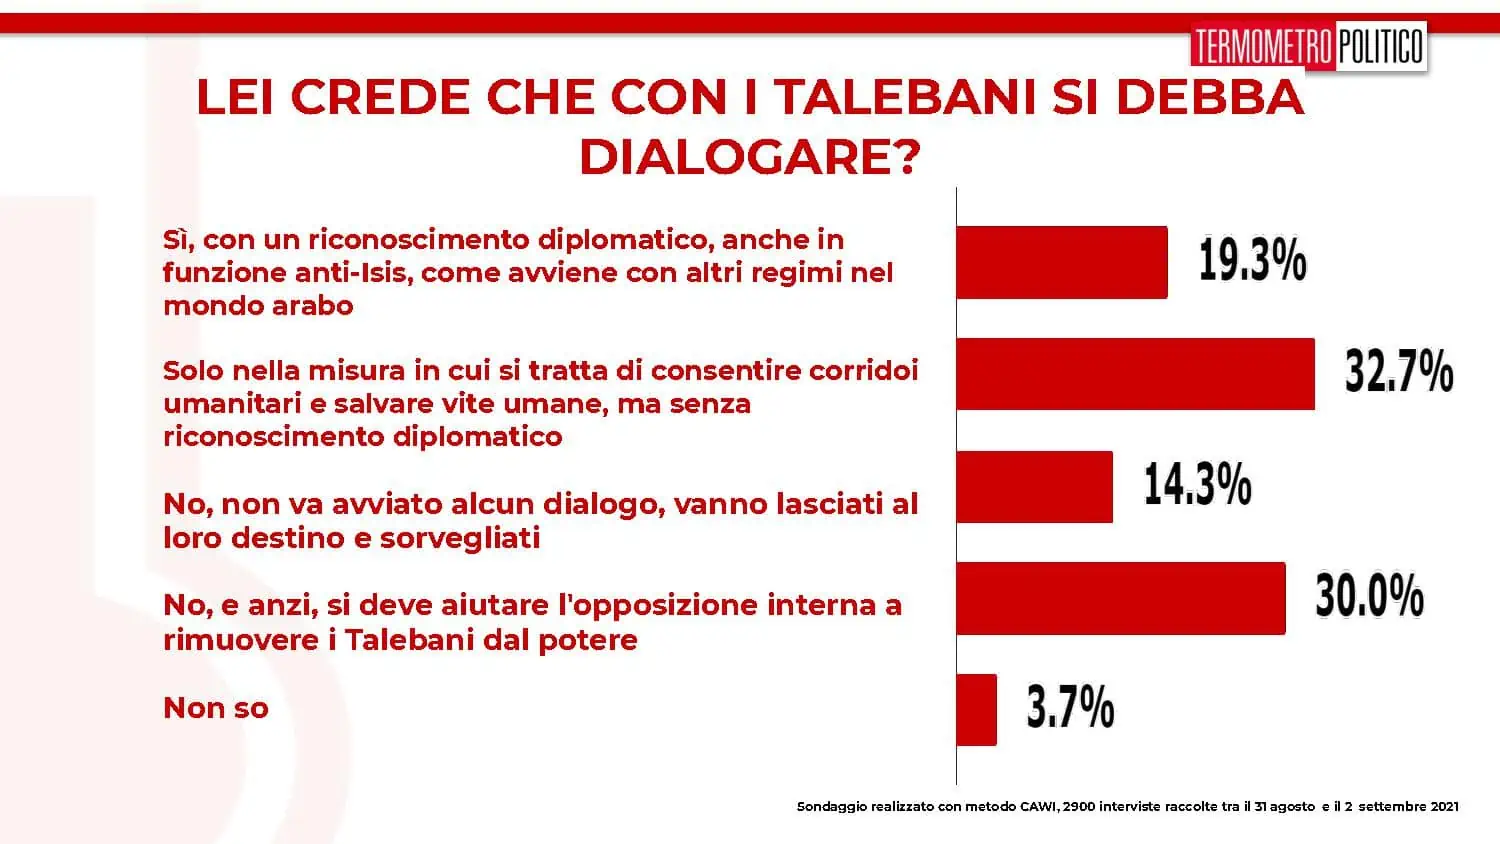 sondaggi tp, dialogo talebani